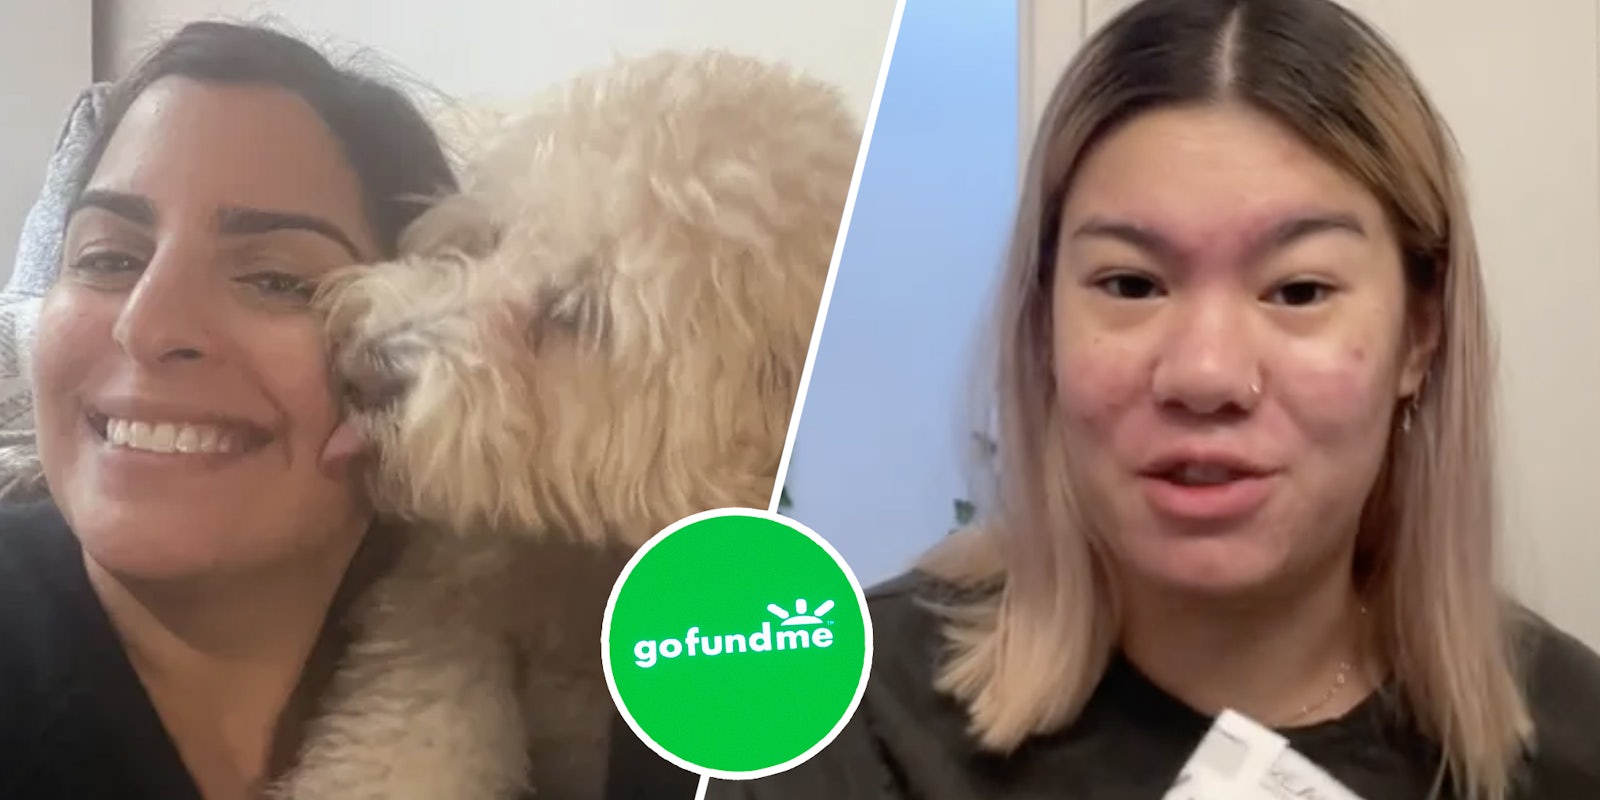 Woman with dog(l), Gofundme logo(c), Woman talking(r)